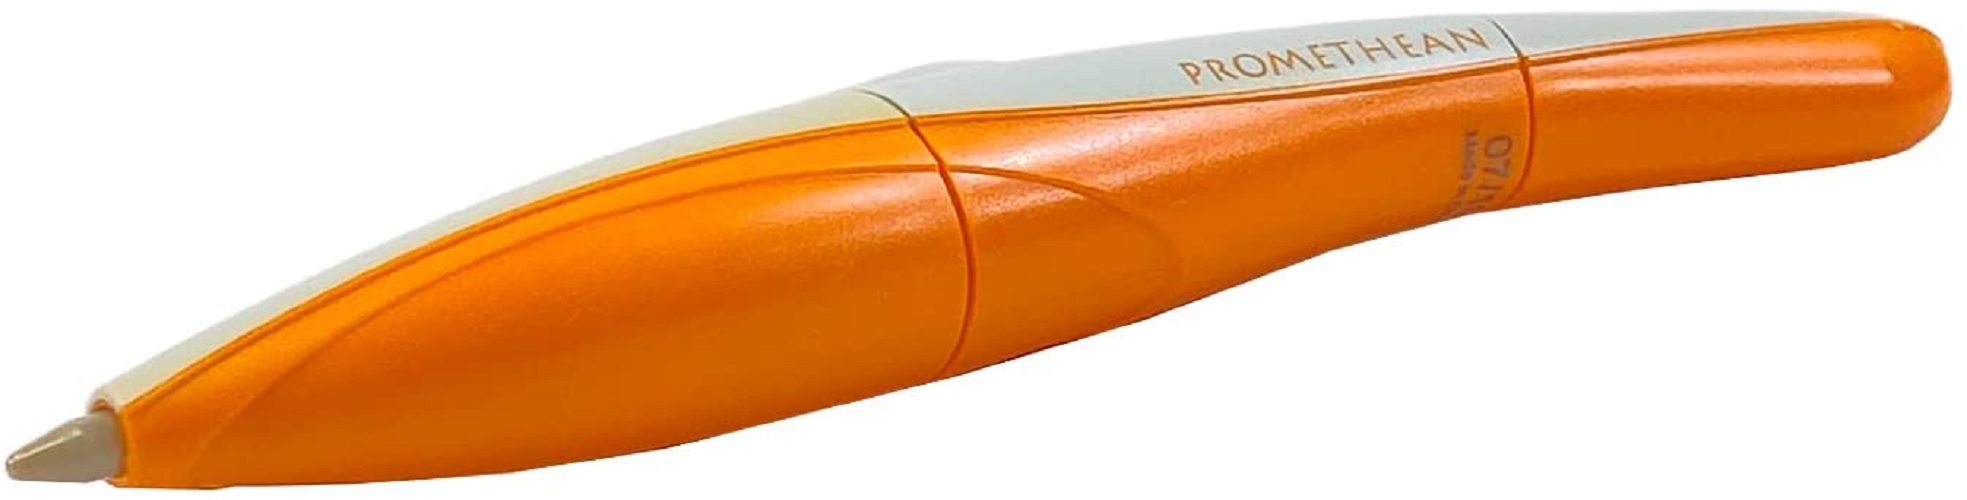 Promethean ARAAC2PENSET ActivArena Spare Pen Set Cordless Battery-free Pen for ActivBoard - image 2 of 5